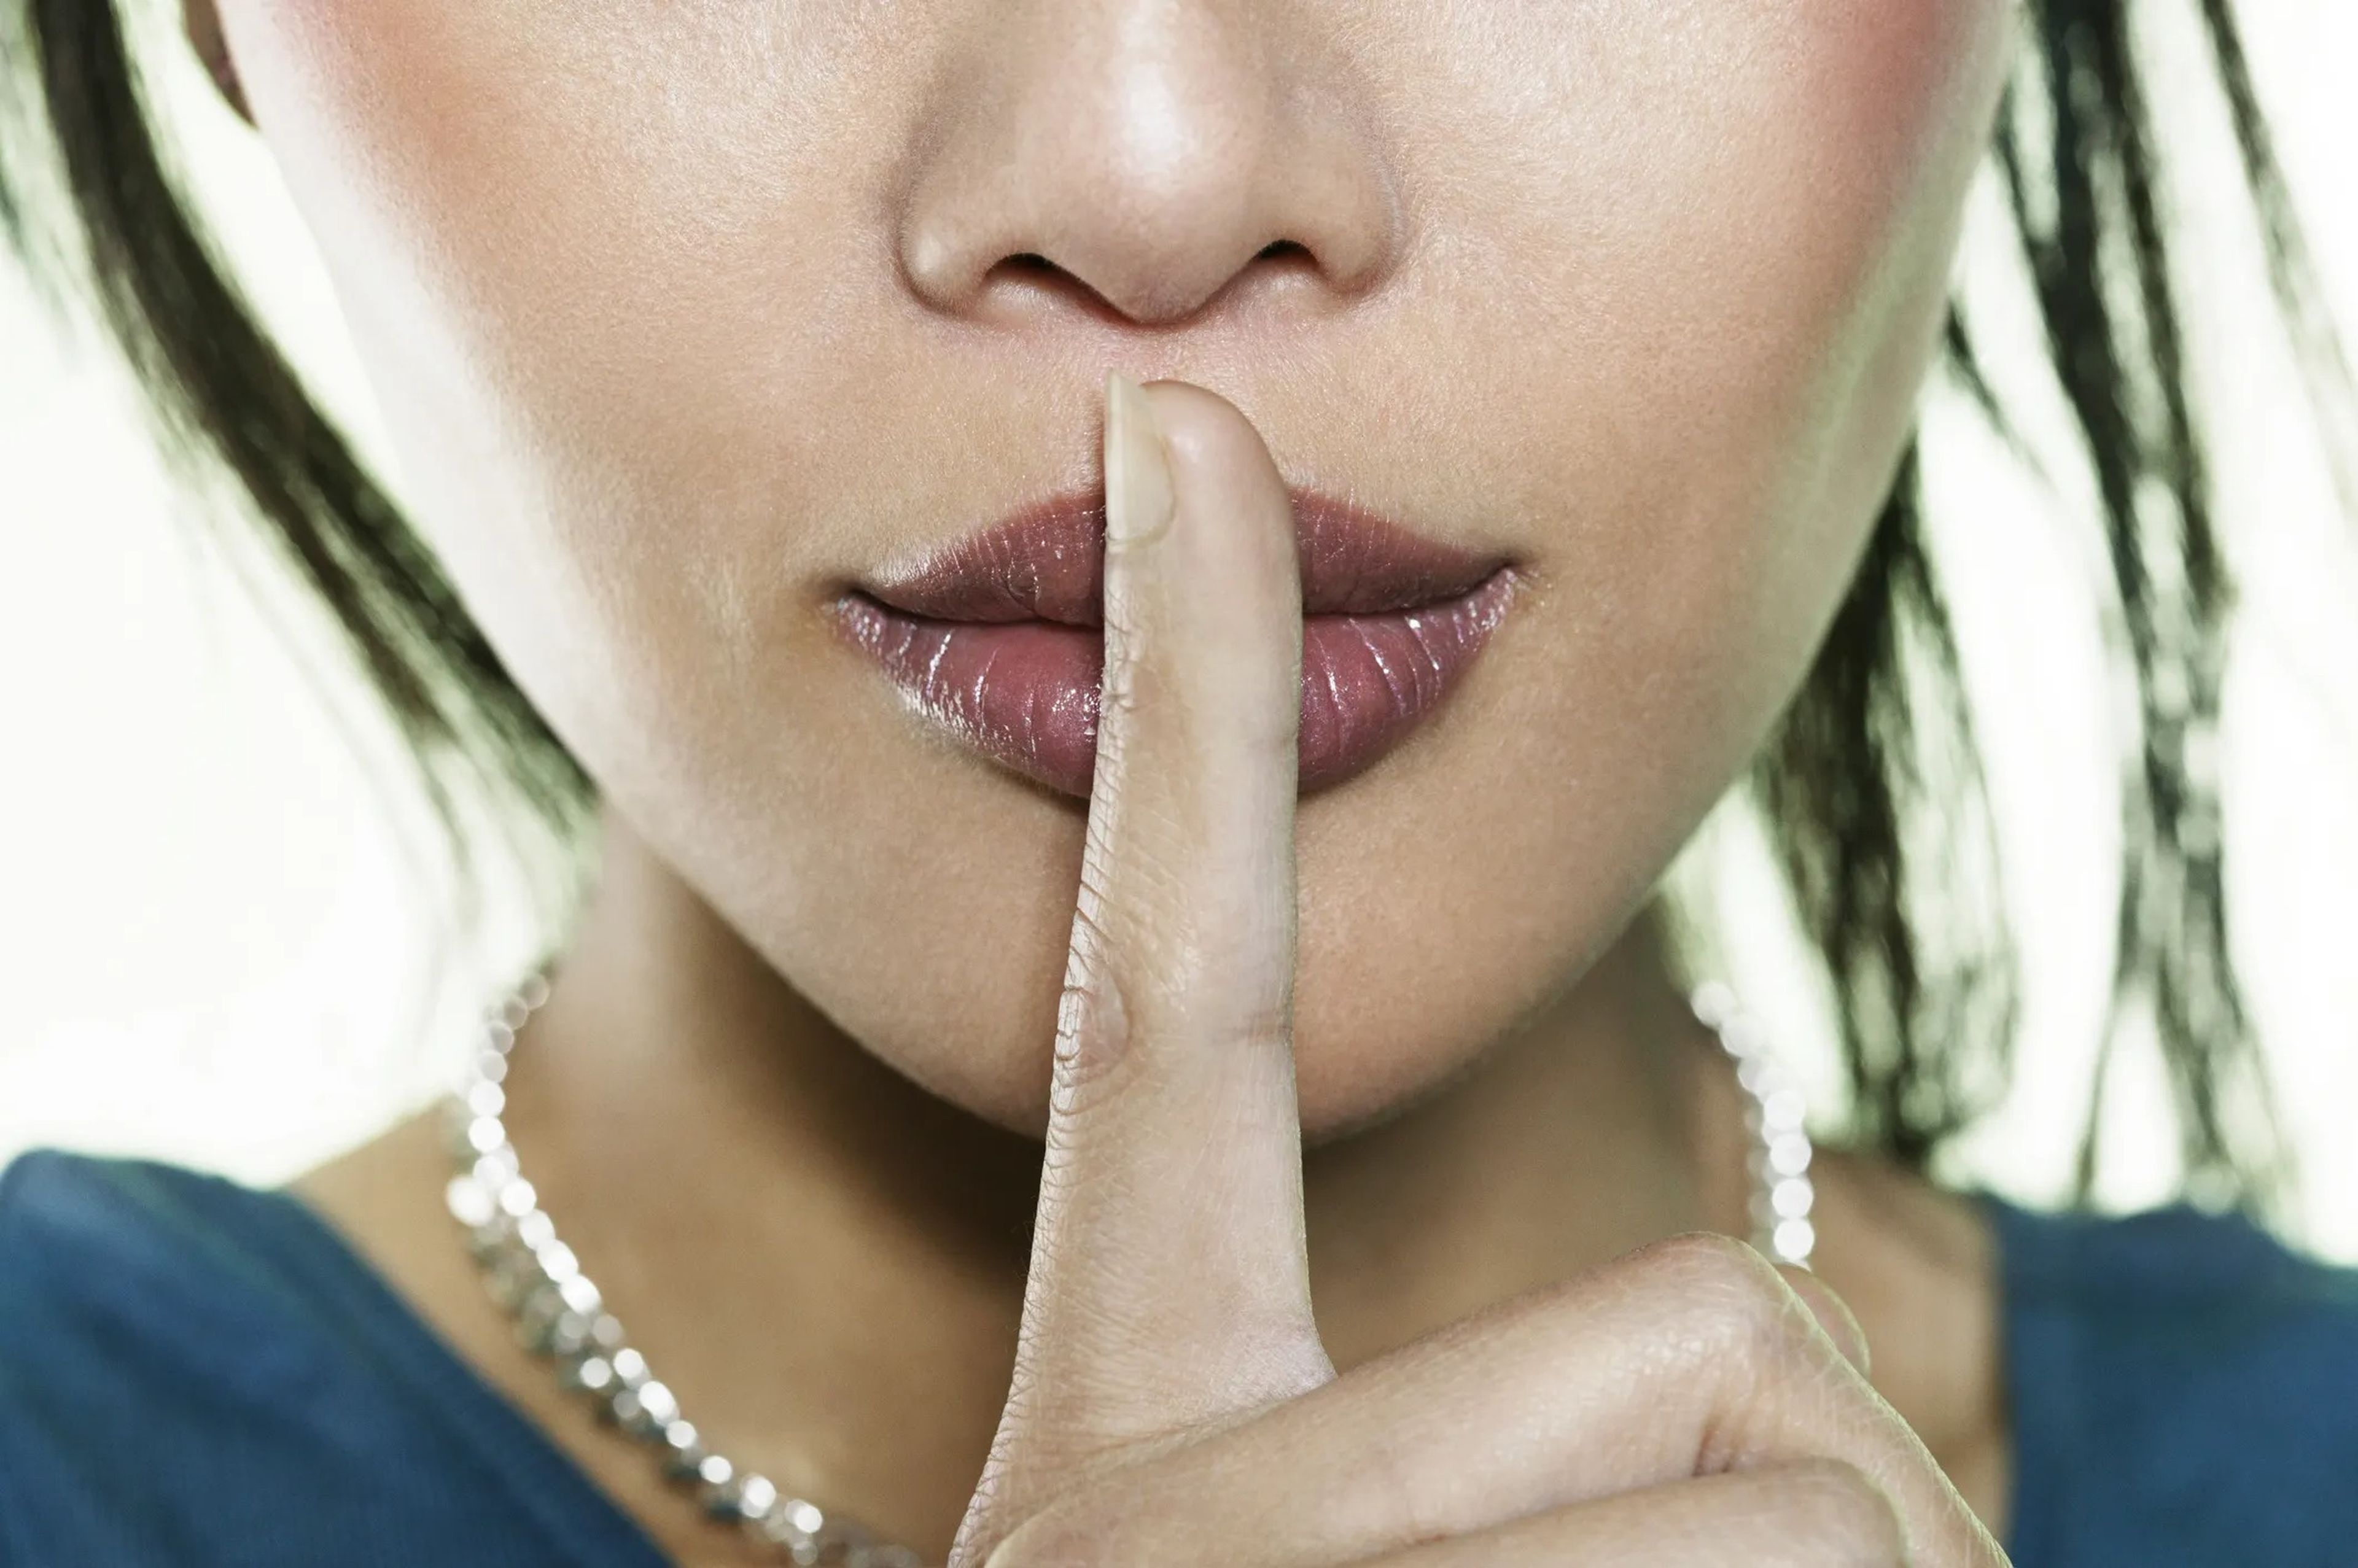 Shhh woman holding finger to lips quiet secret